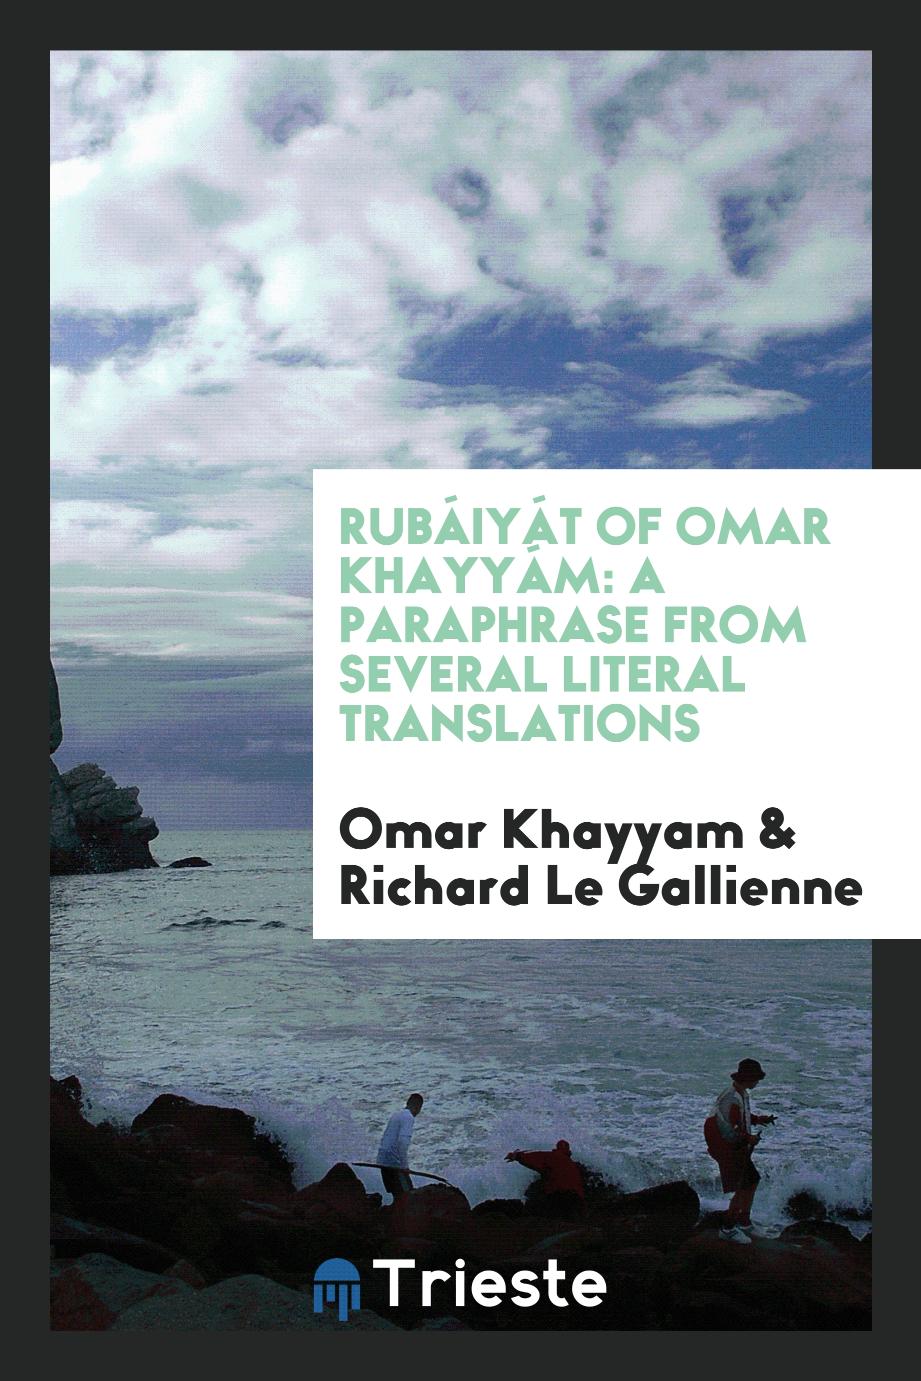 Omar  Khayyam, Richard Le Gallienne - Rubáiyát of Omar Khayyám: a paraphrase from several literal translations